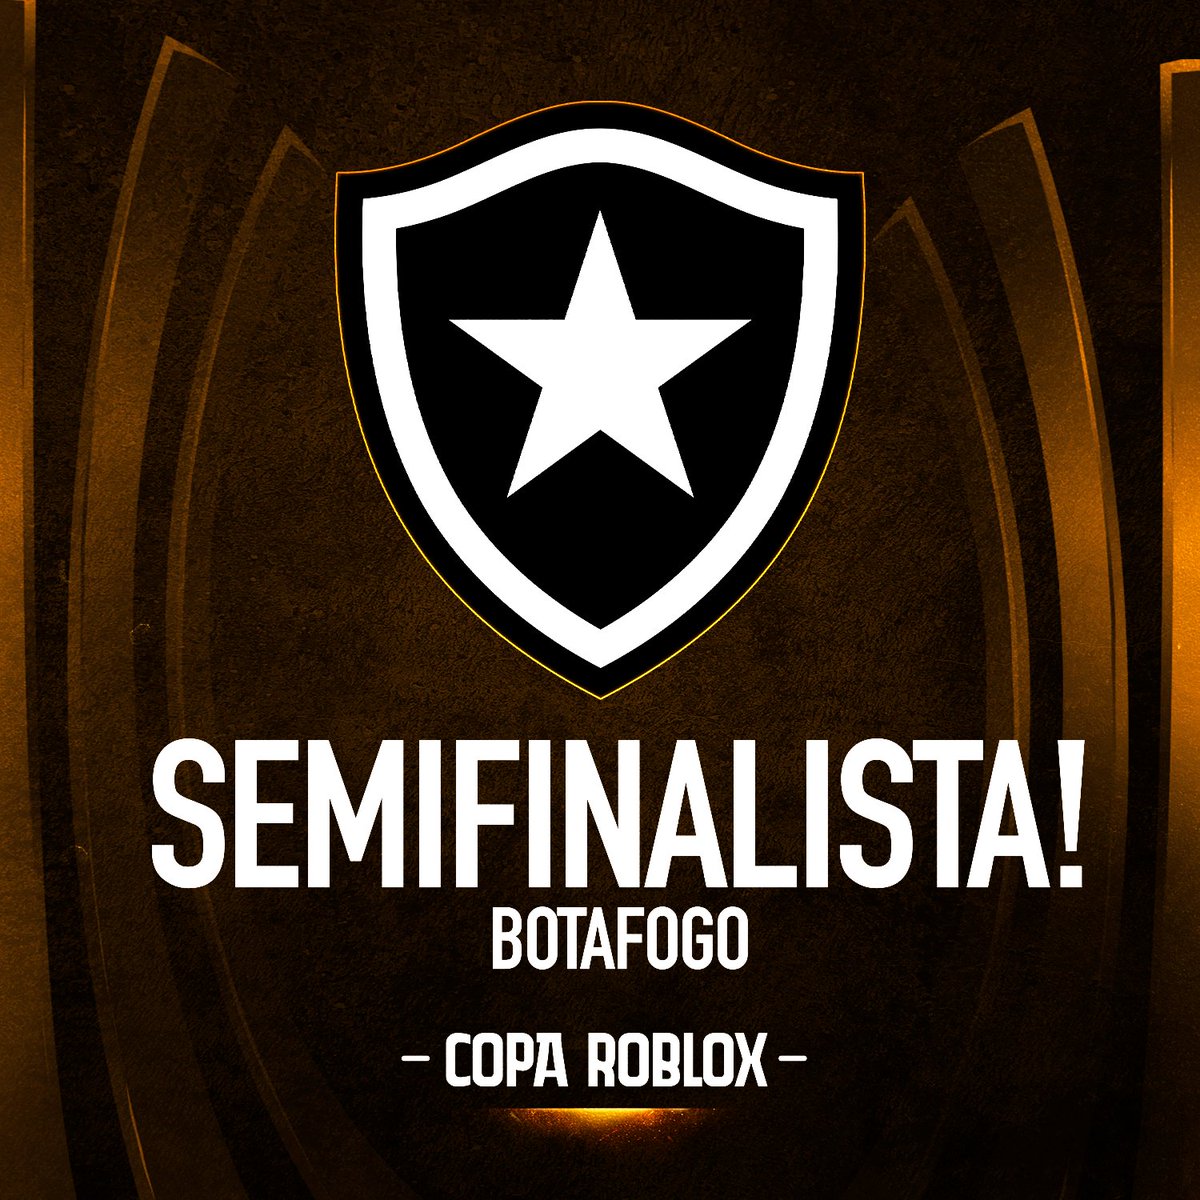 Copa Roblox 🏆 on X: O Botafogo fez o Flamengo de CHA CO TA